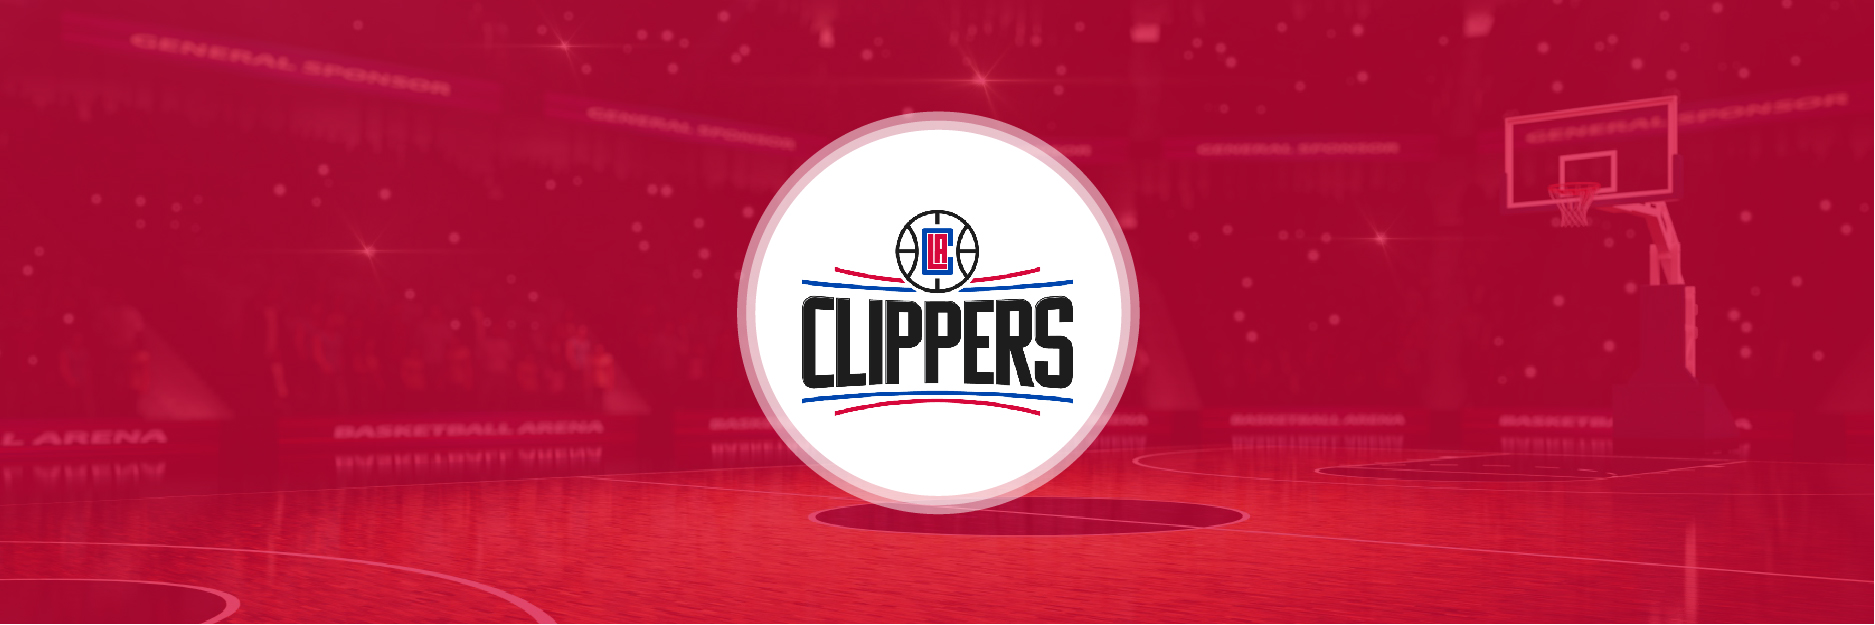 NBA Los Angeles Clippers 2020 Season Analysis